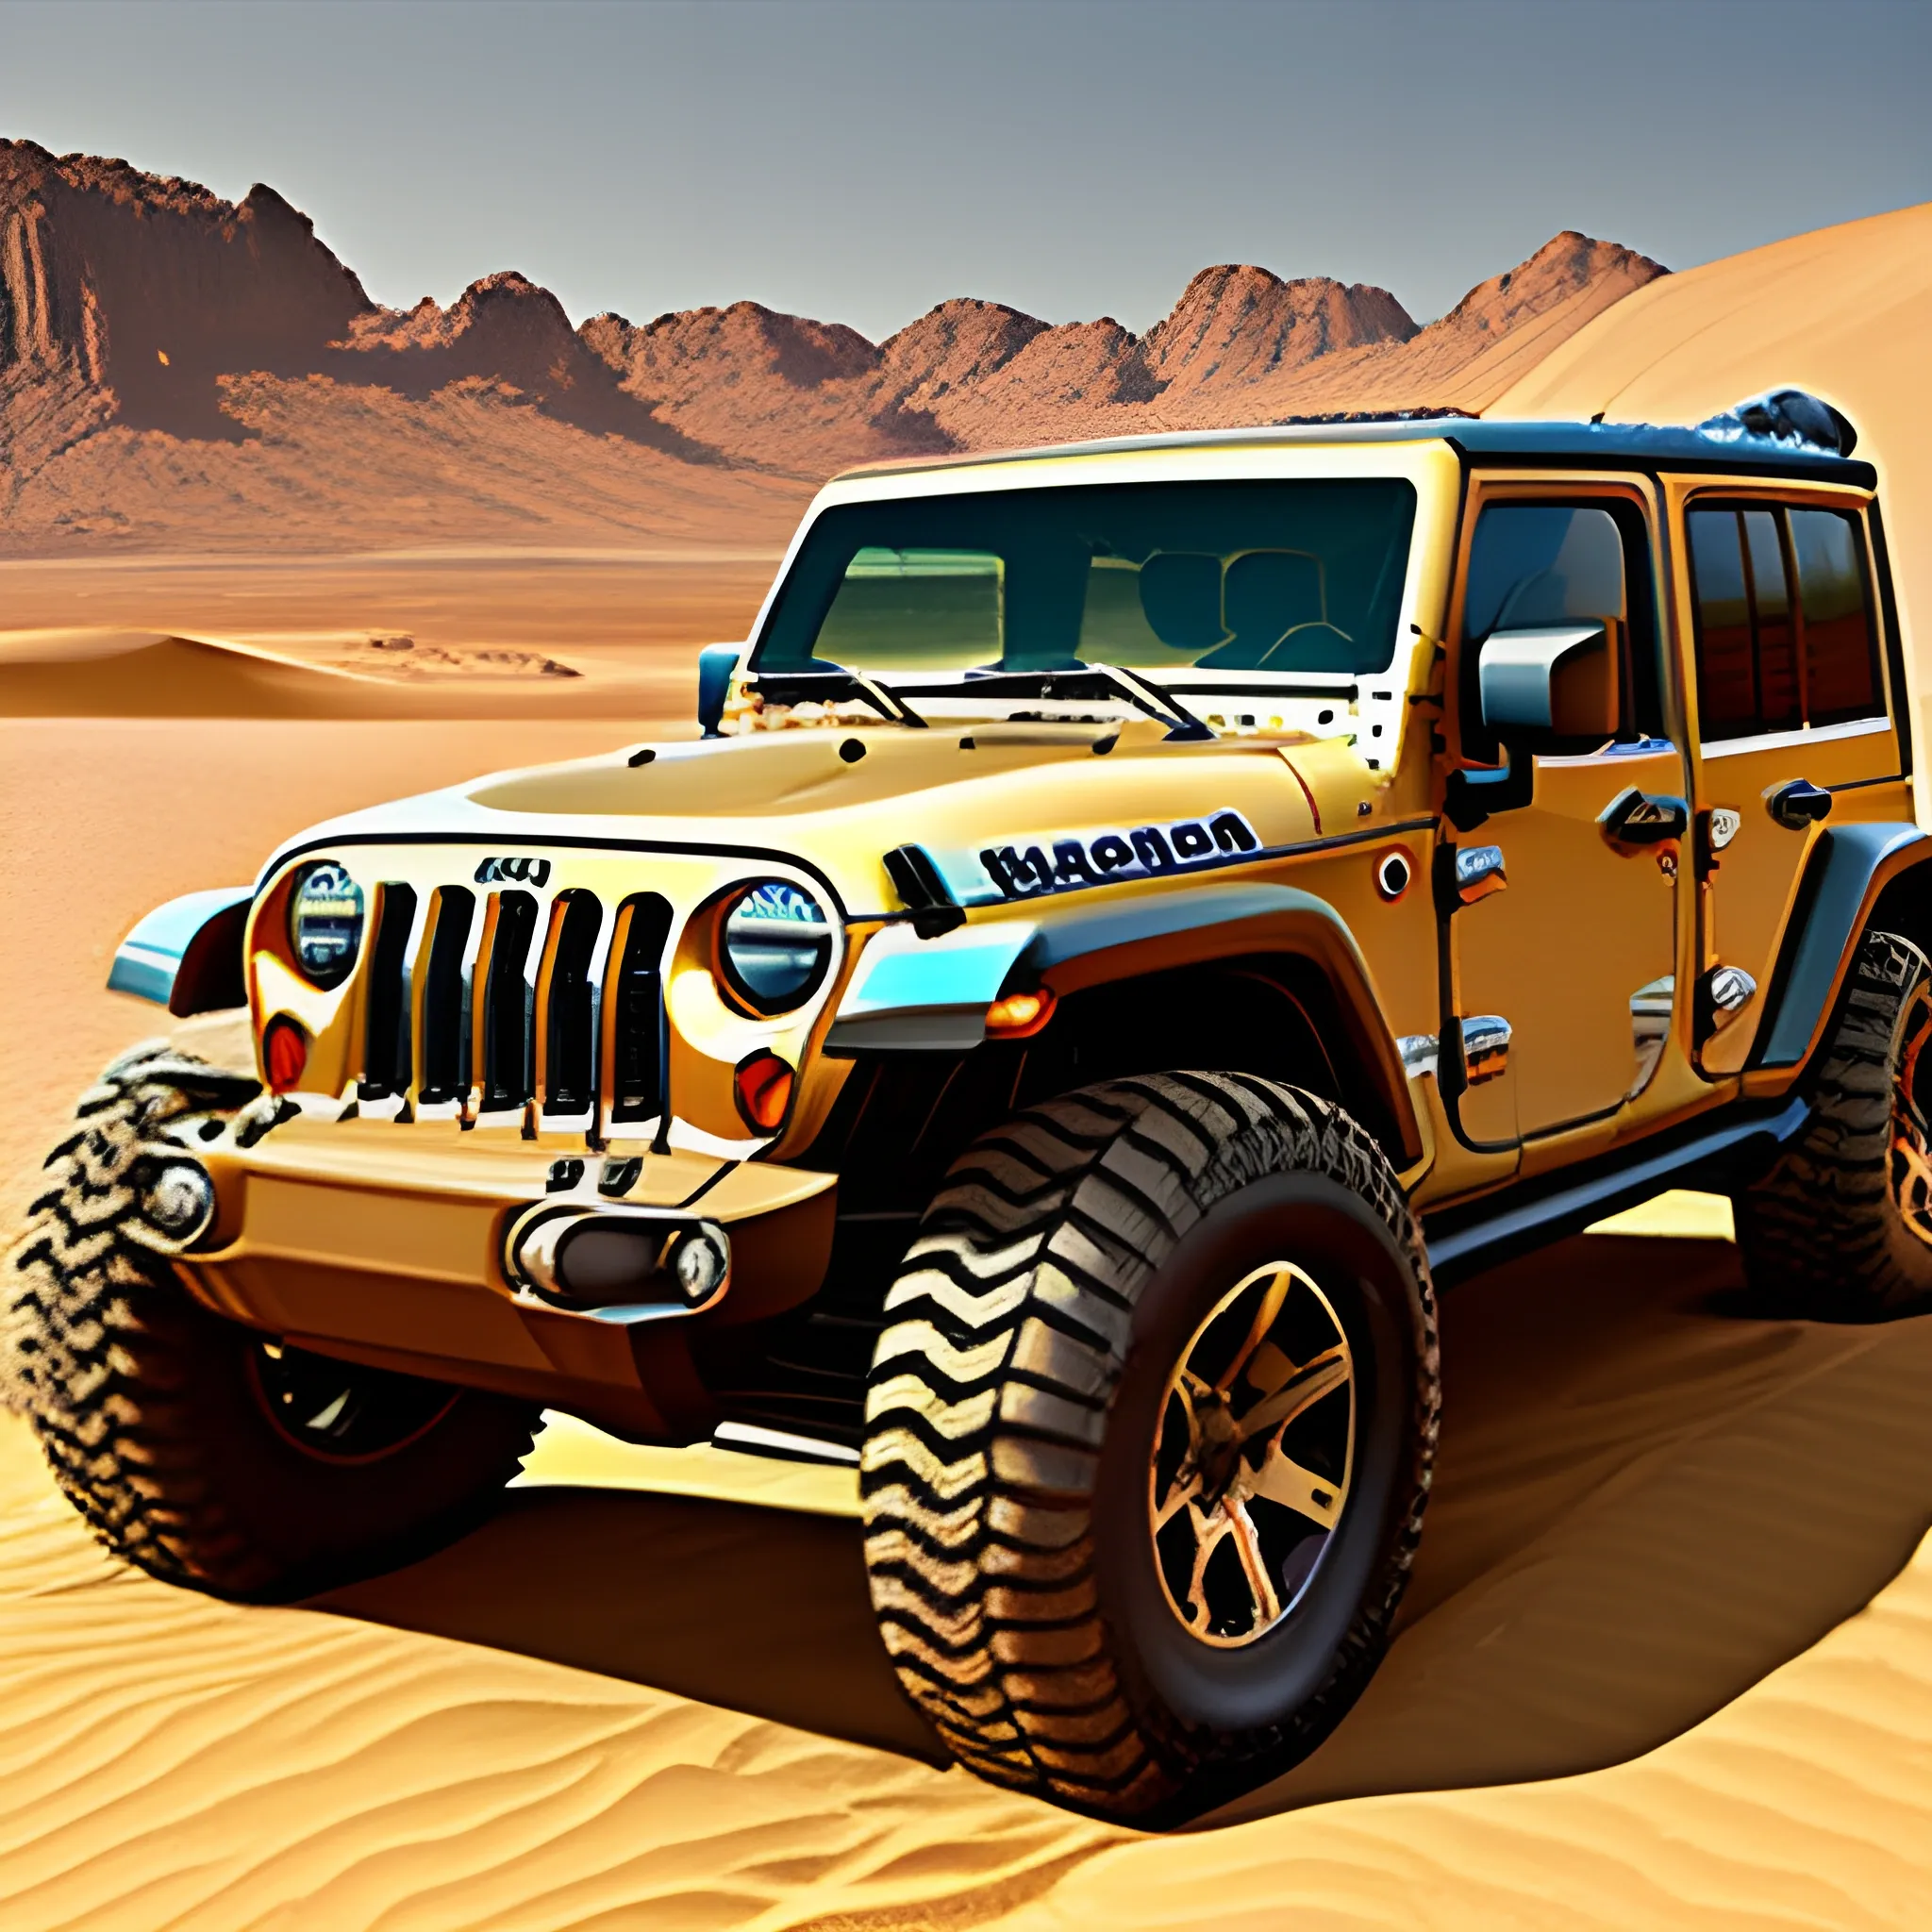 
jeep monster offroad sun light color sand in desert
